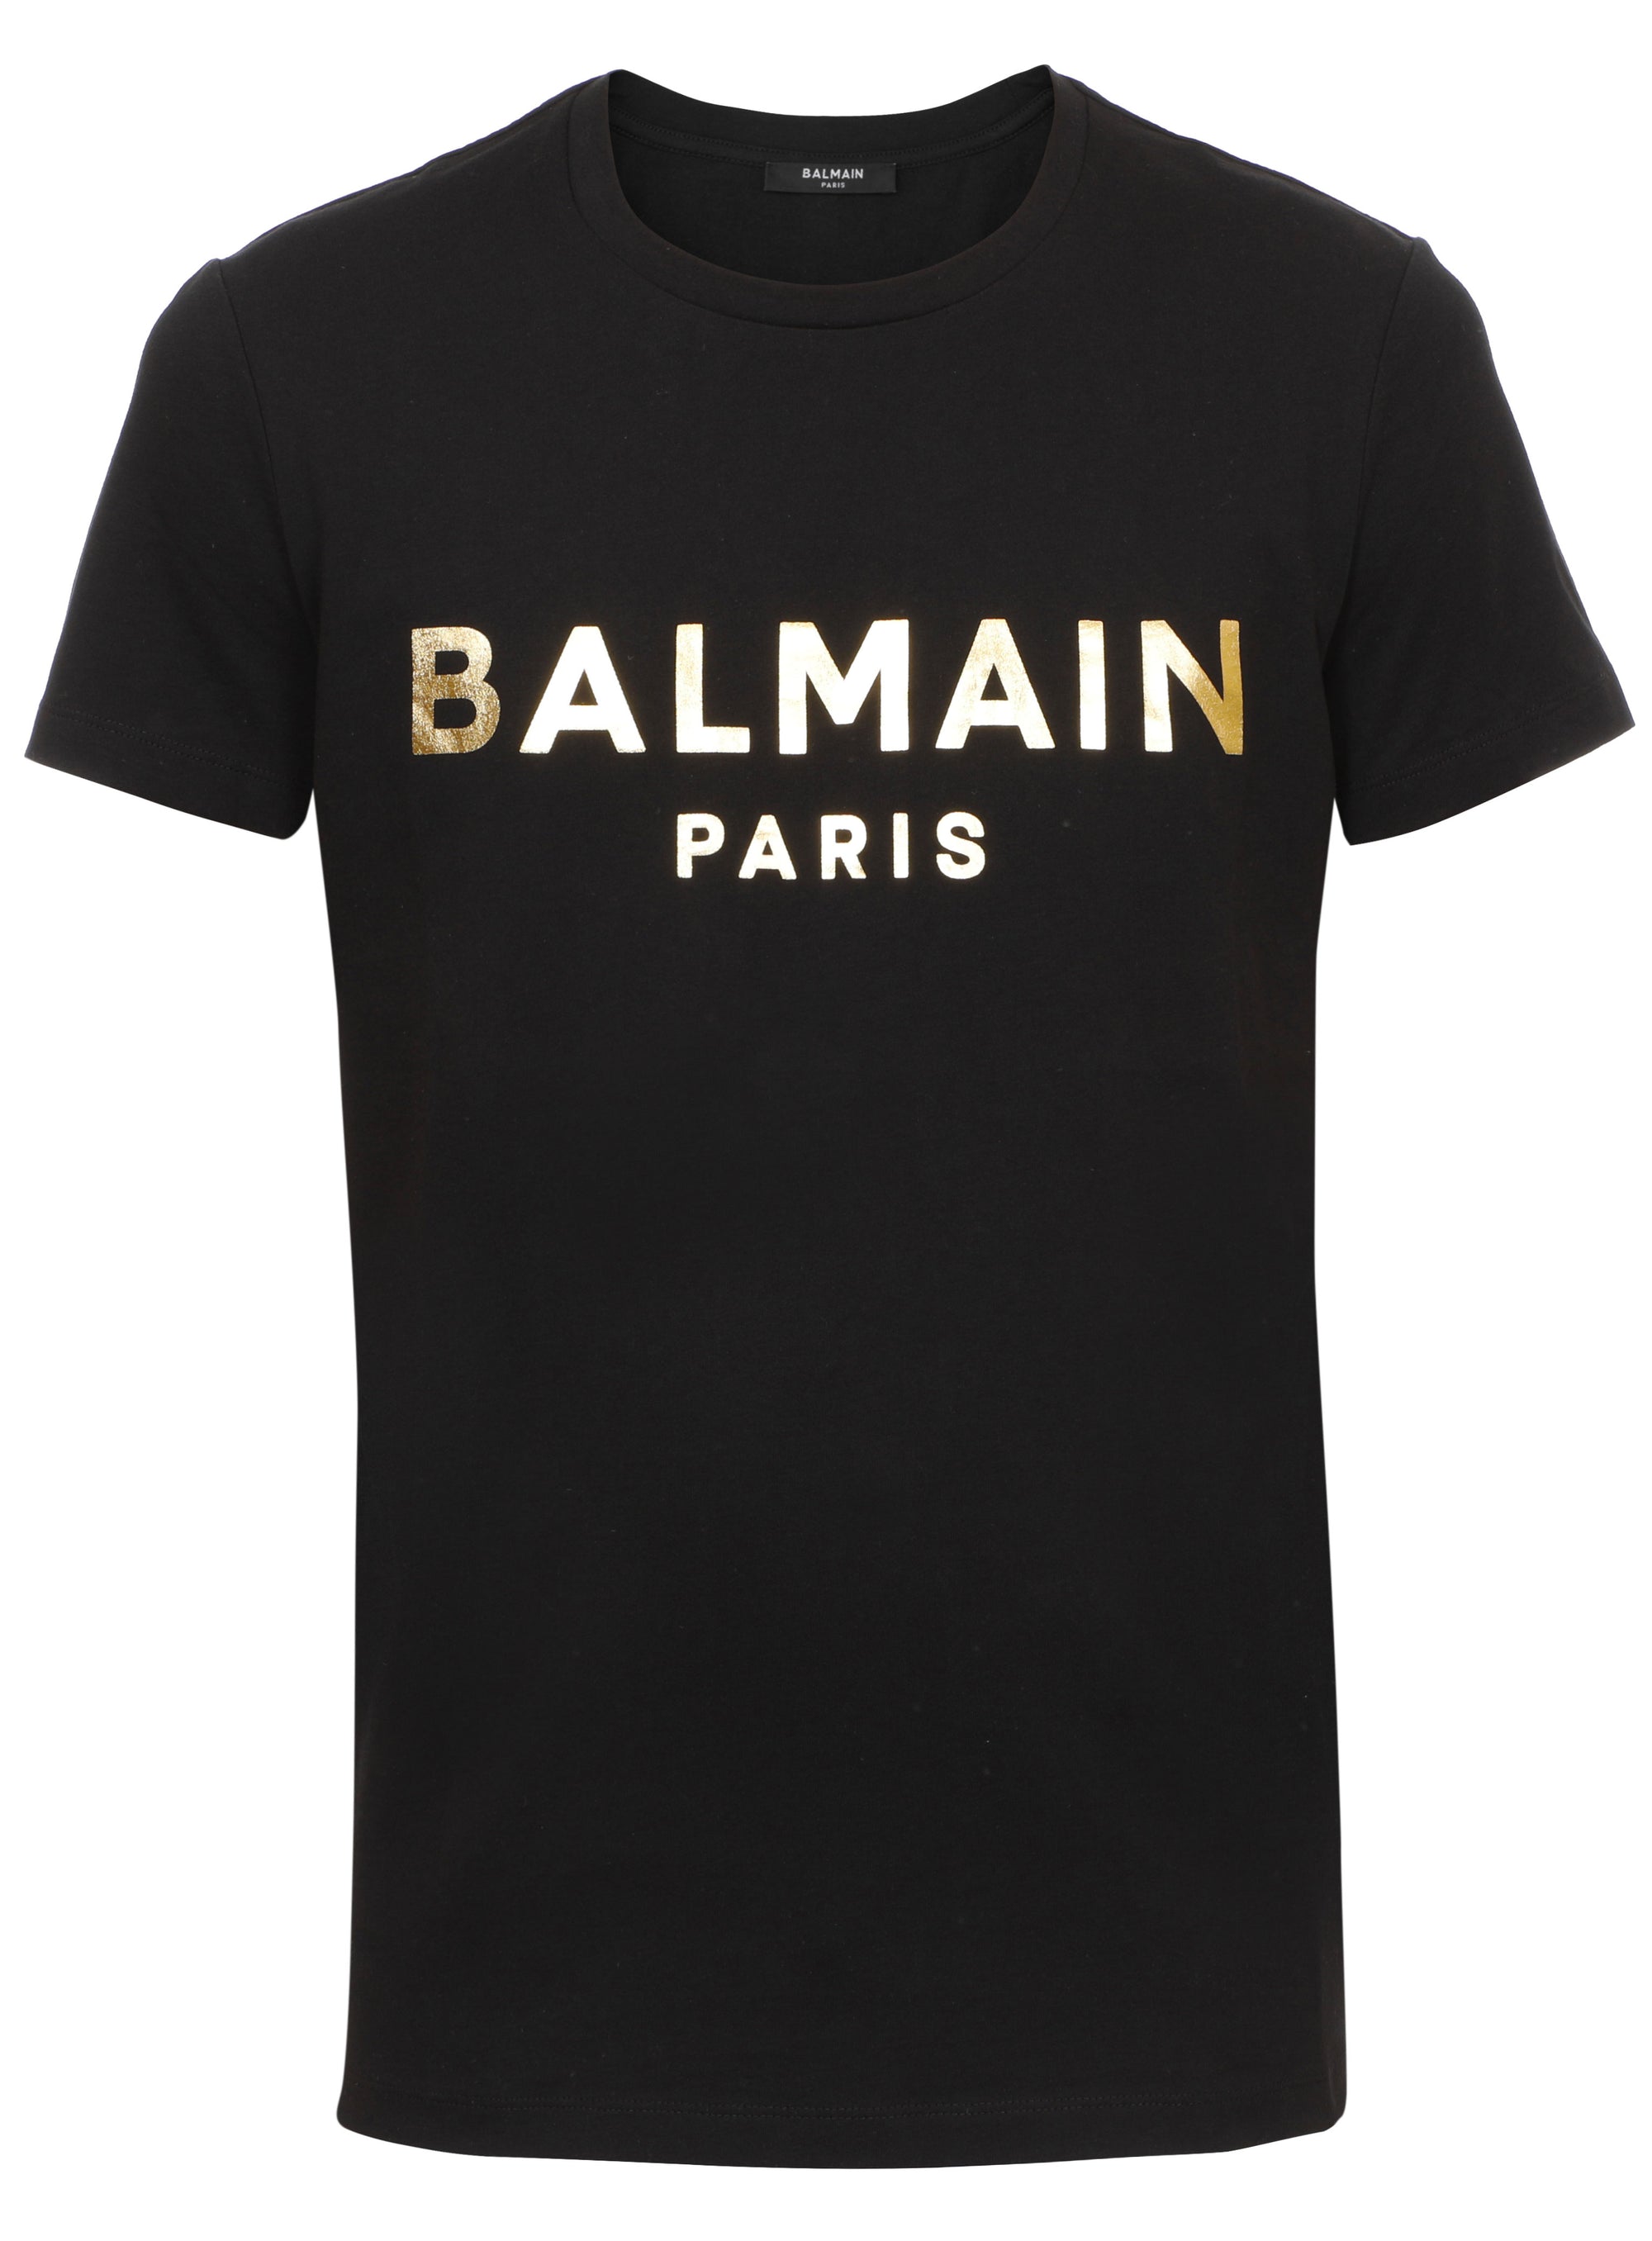 BALMAIN FOIL PRINTED T-SHIRT CLASSIC FIT - BLACK W/ GOLD